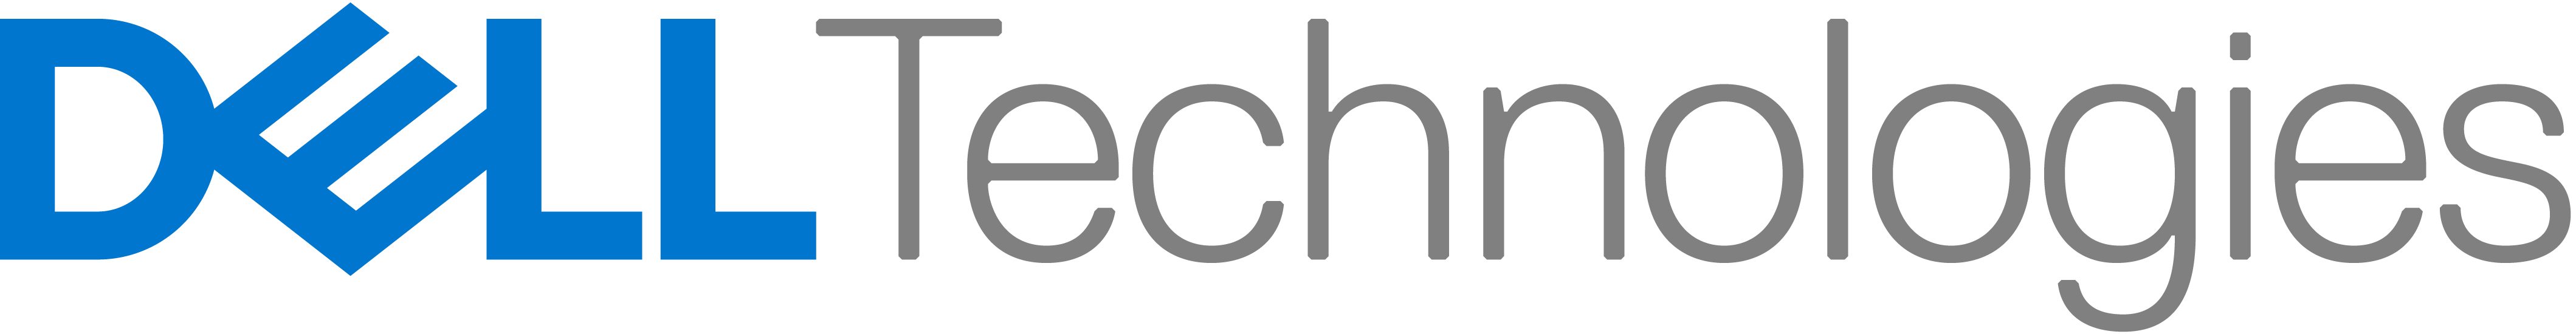 logo DellTech